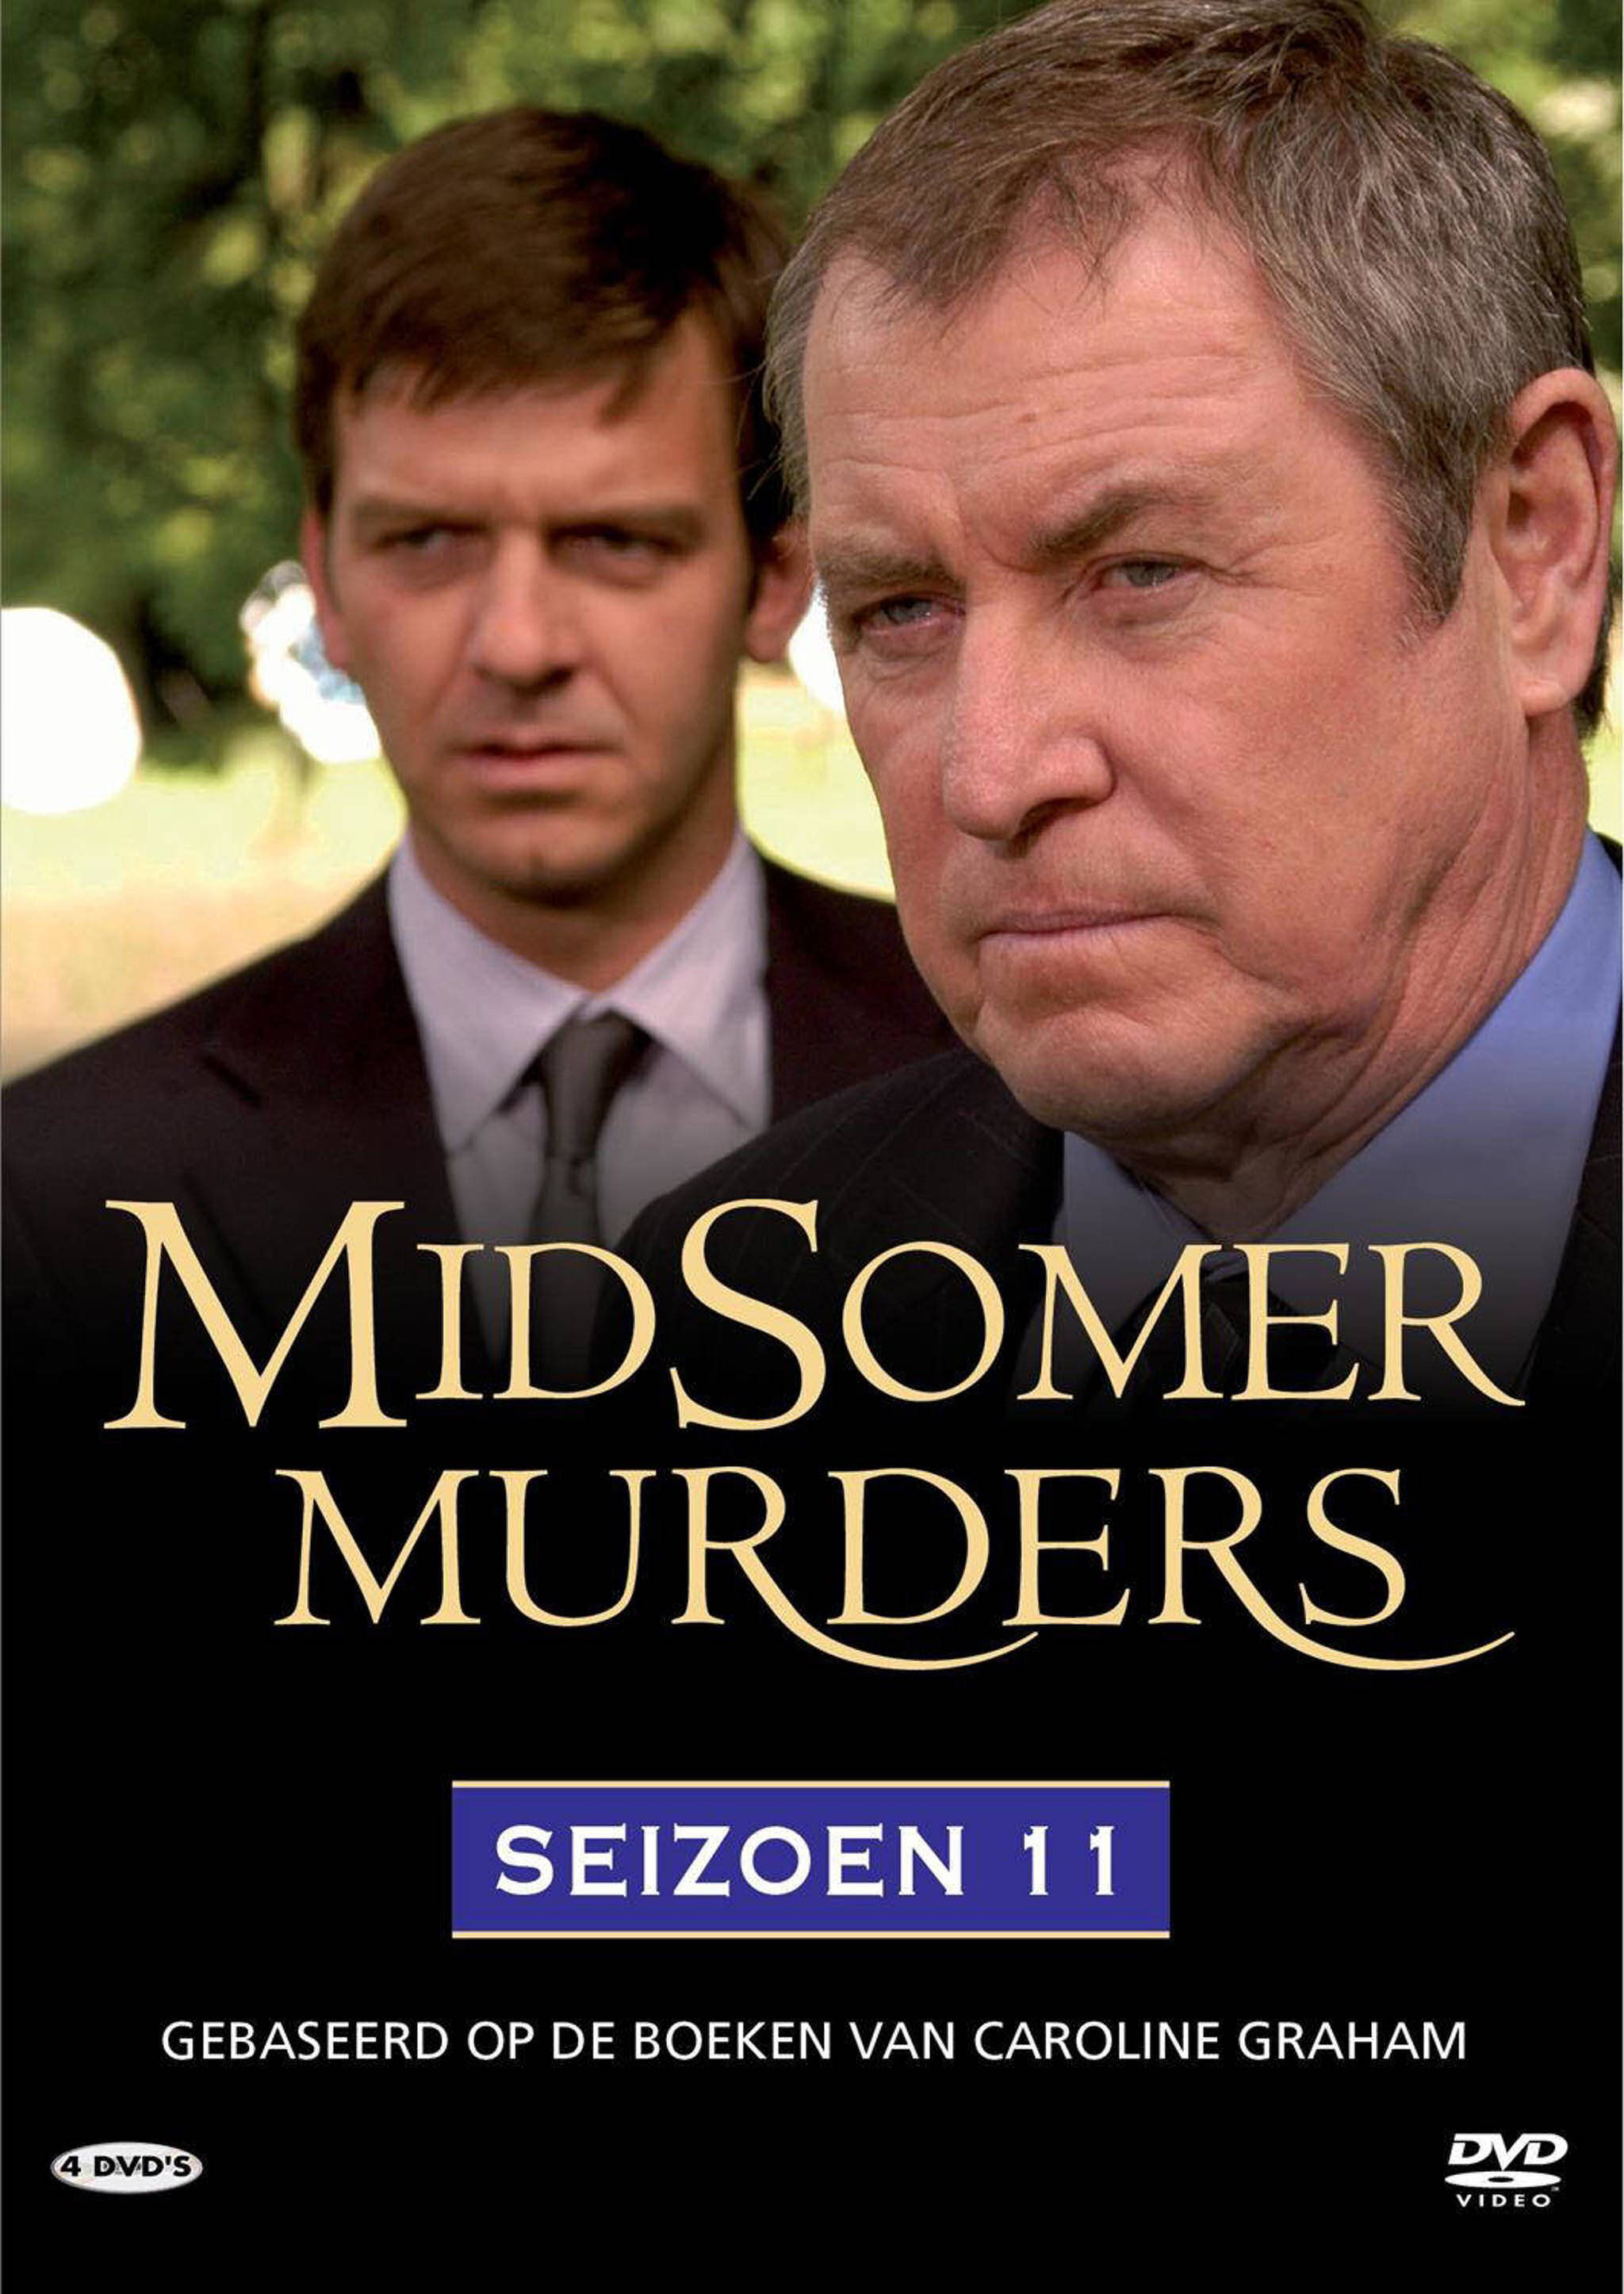 REPOST Midsomer Murders Seizoen 11 - DvD 2